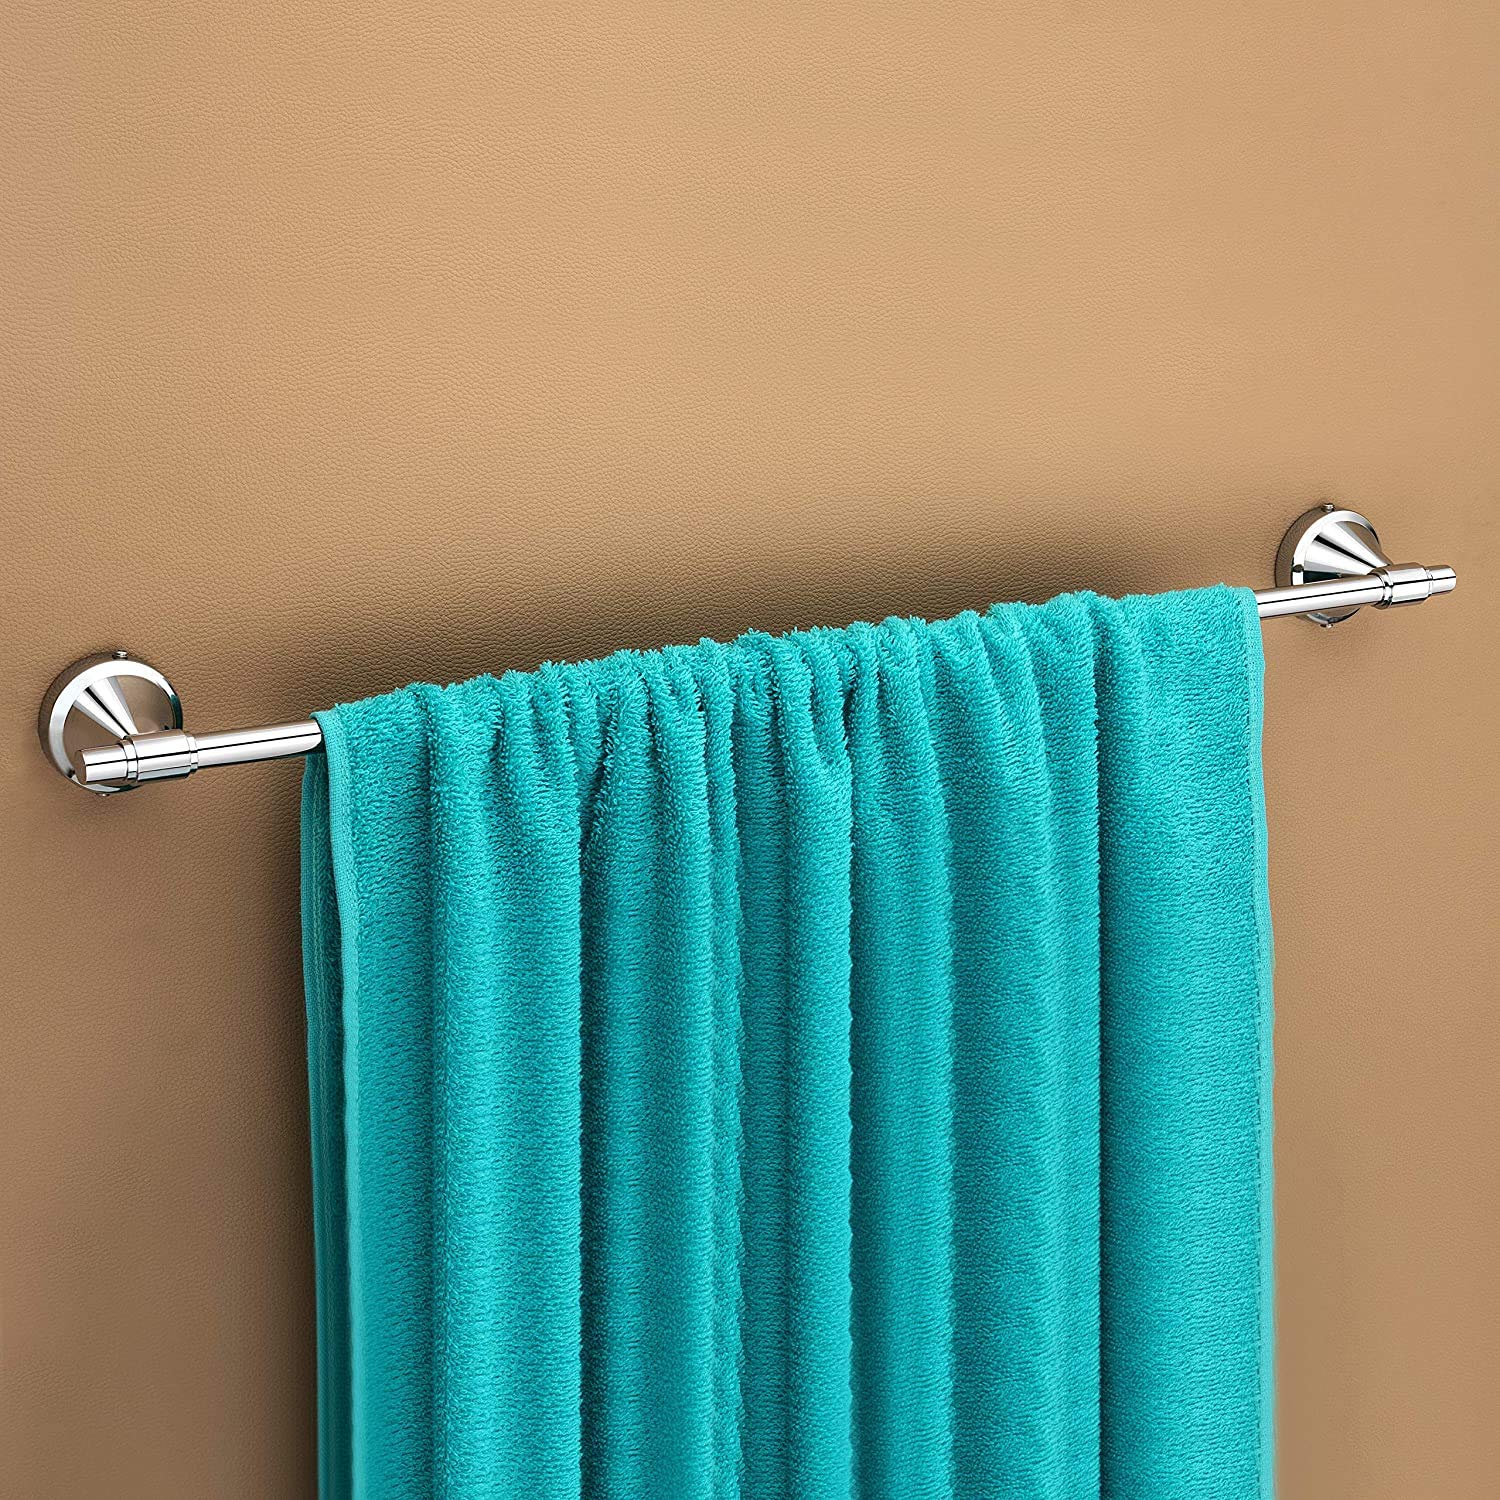 Plantex Stainless Steel 304 Grade Niko Towel Hanger for Bathroom/Towel Rod/Bar/Bathroom Accessories(24inch-Chrome) - Pack of 4